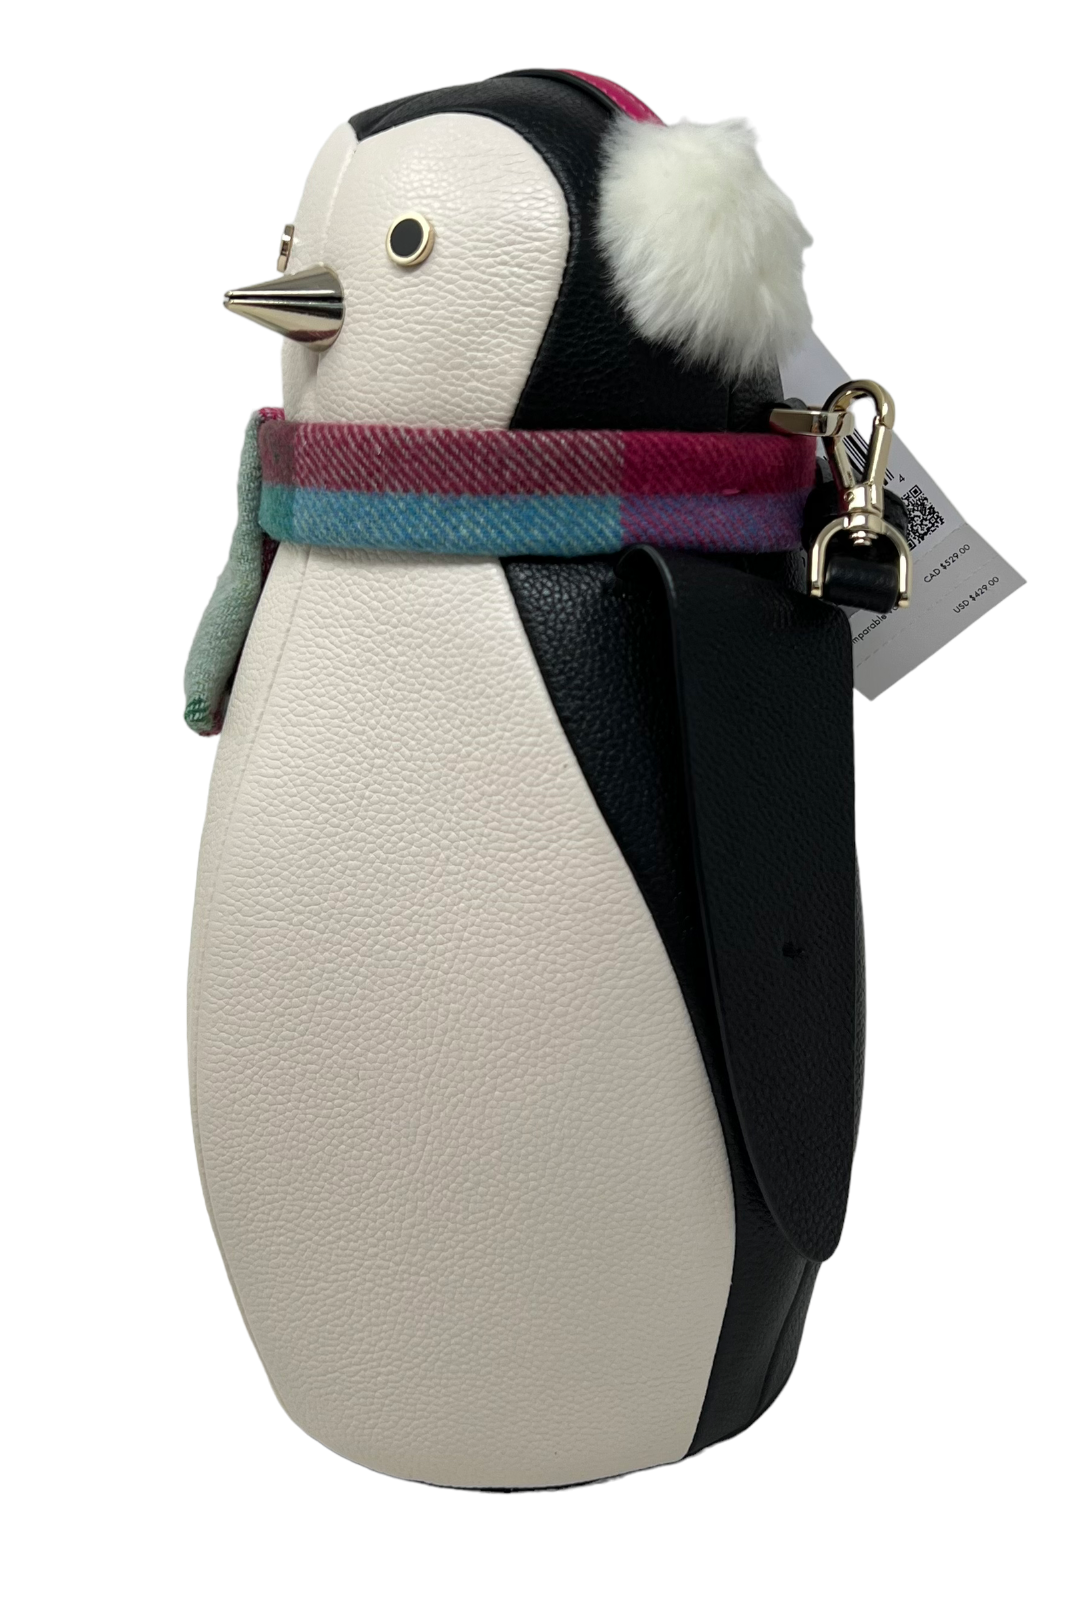 Kate Spade Morty Penguin Crossbody Bag Rare Novelty Item K9523 $429